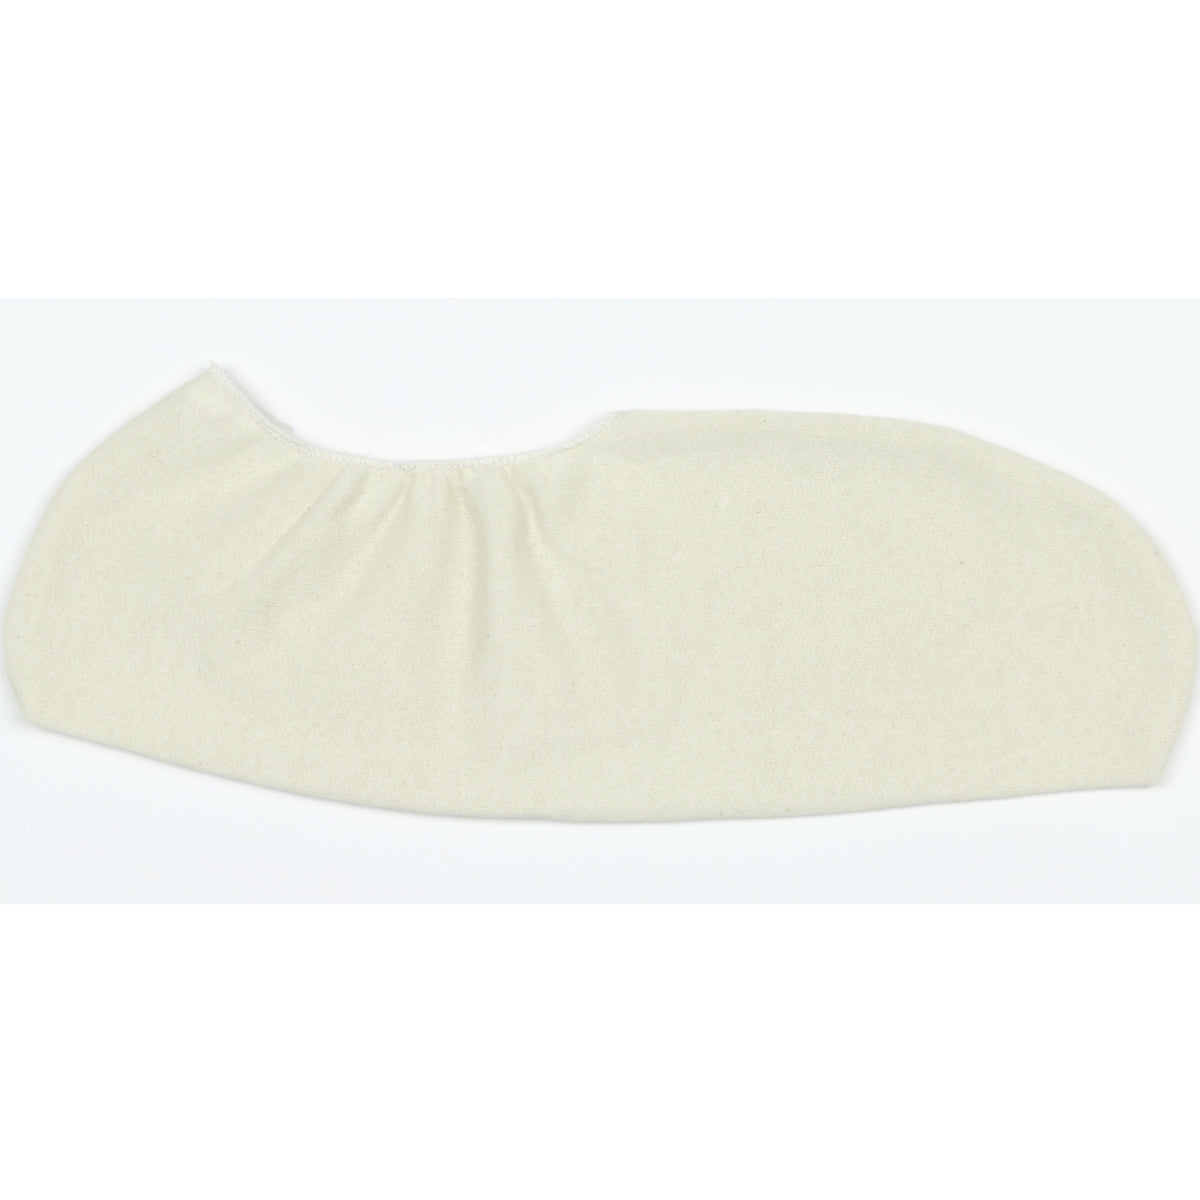 PIP WSXXL 100% Cotton Fleece Wing Sock with Elastic Top